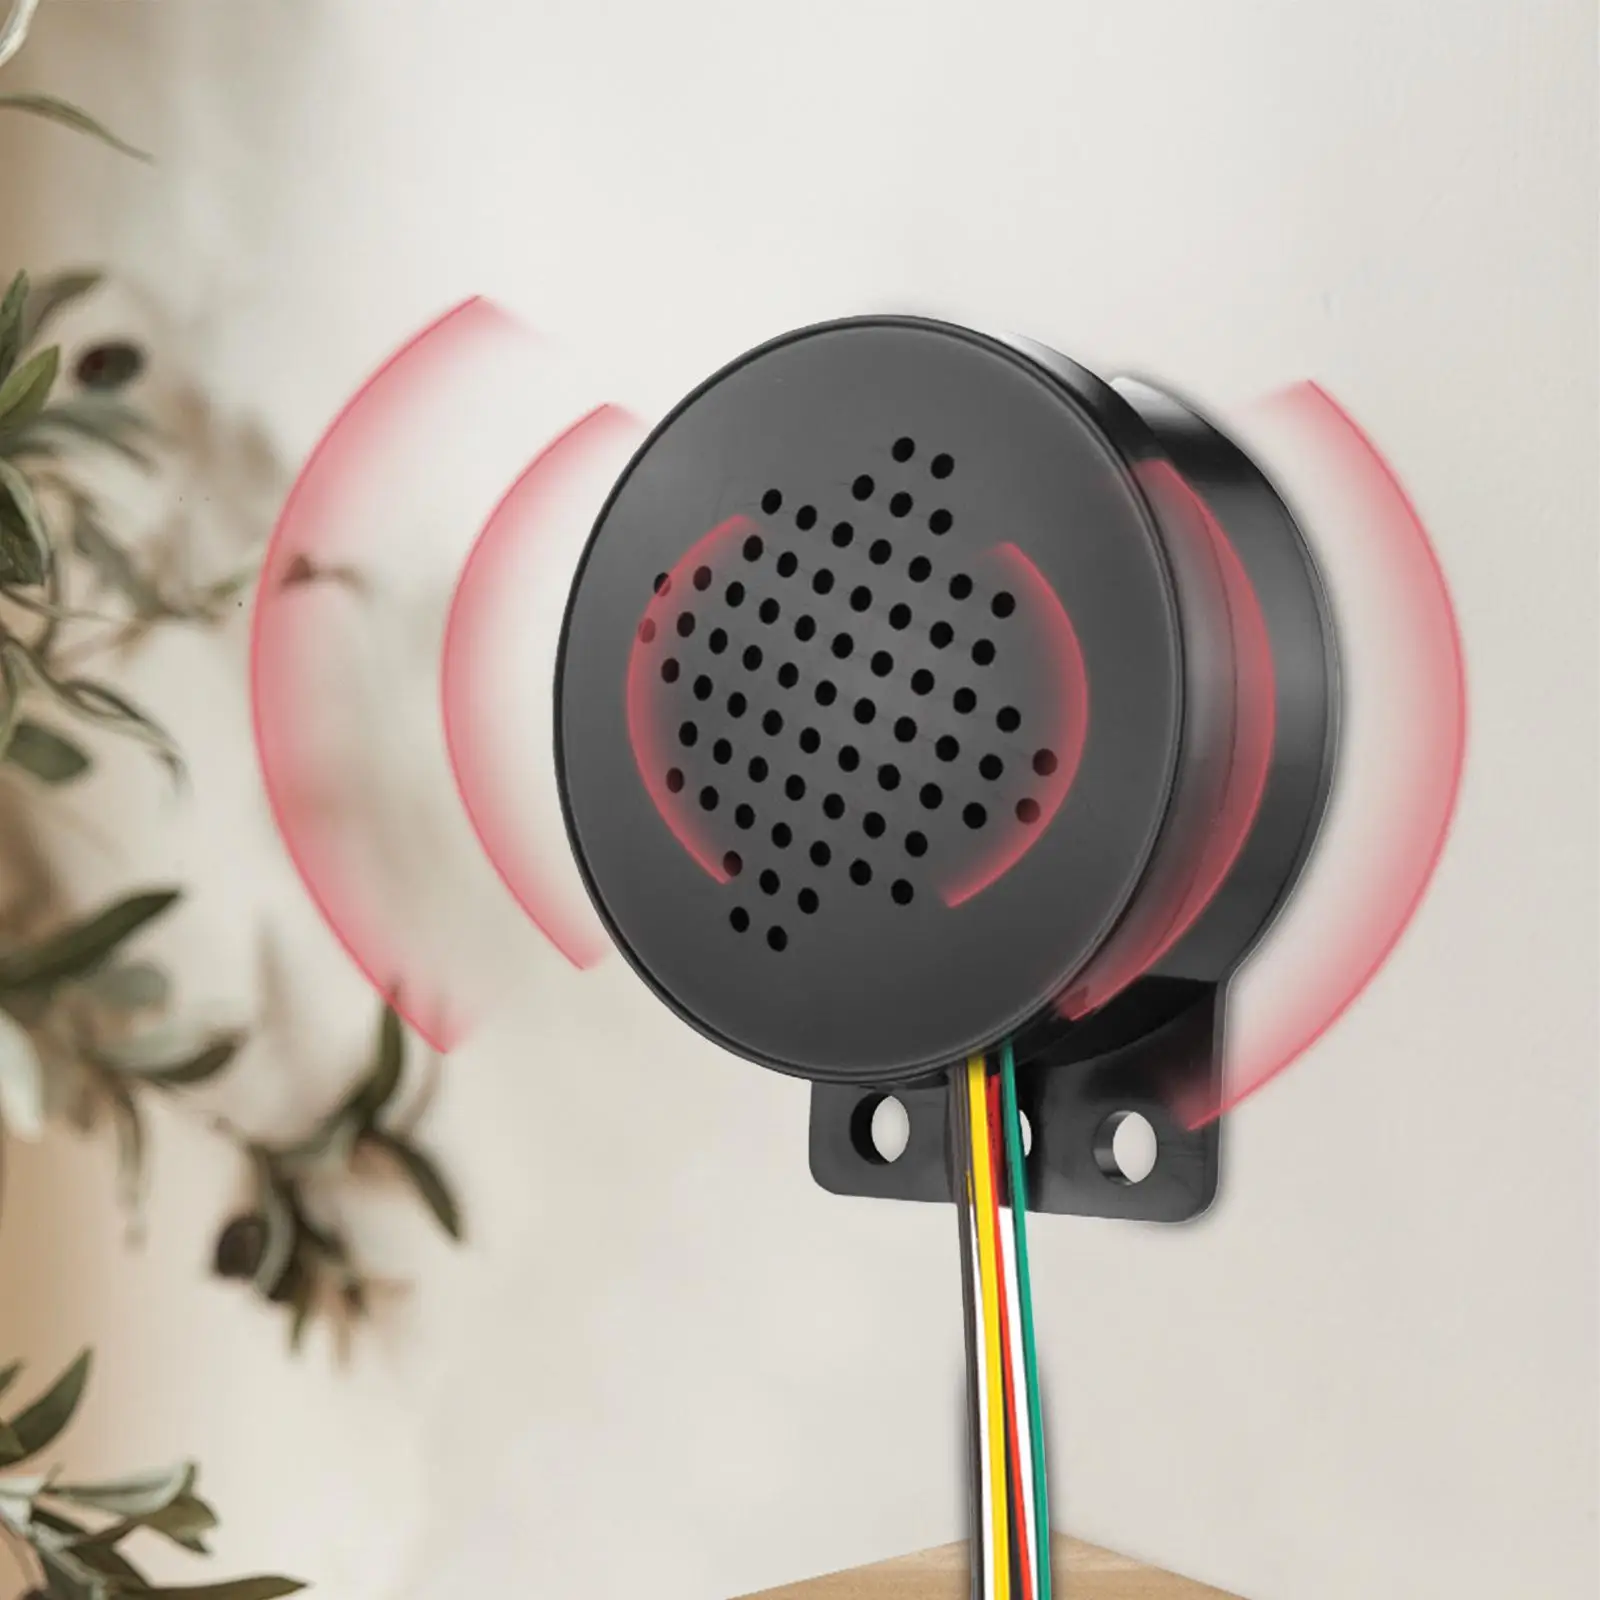 Voice Prompter Broadcast Recording Speaker Easy Installation 12-24V Voice Speaker for Factories Hotels Driveway Doorway Stores